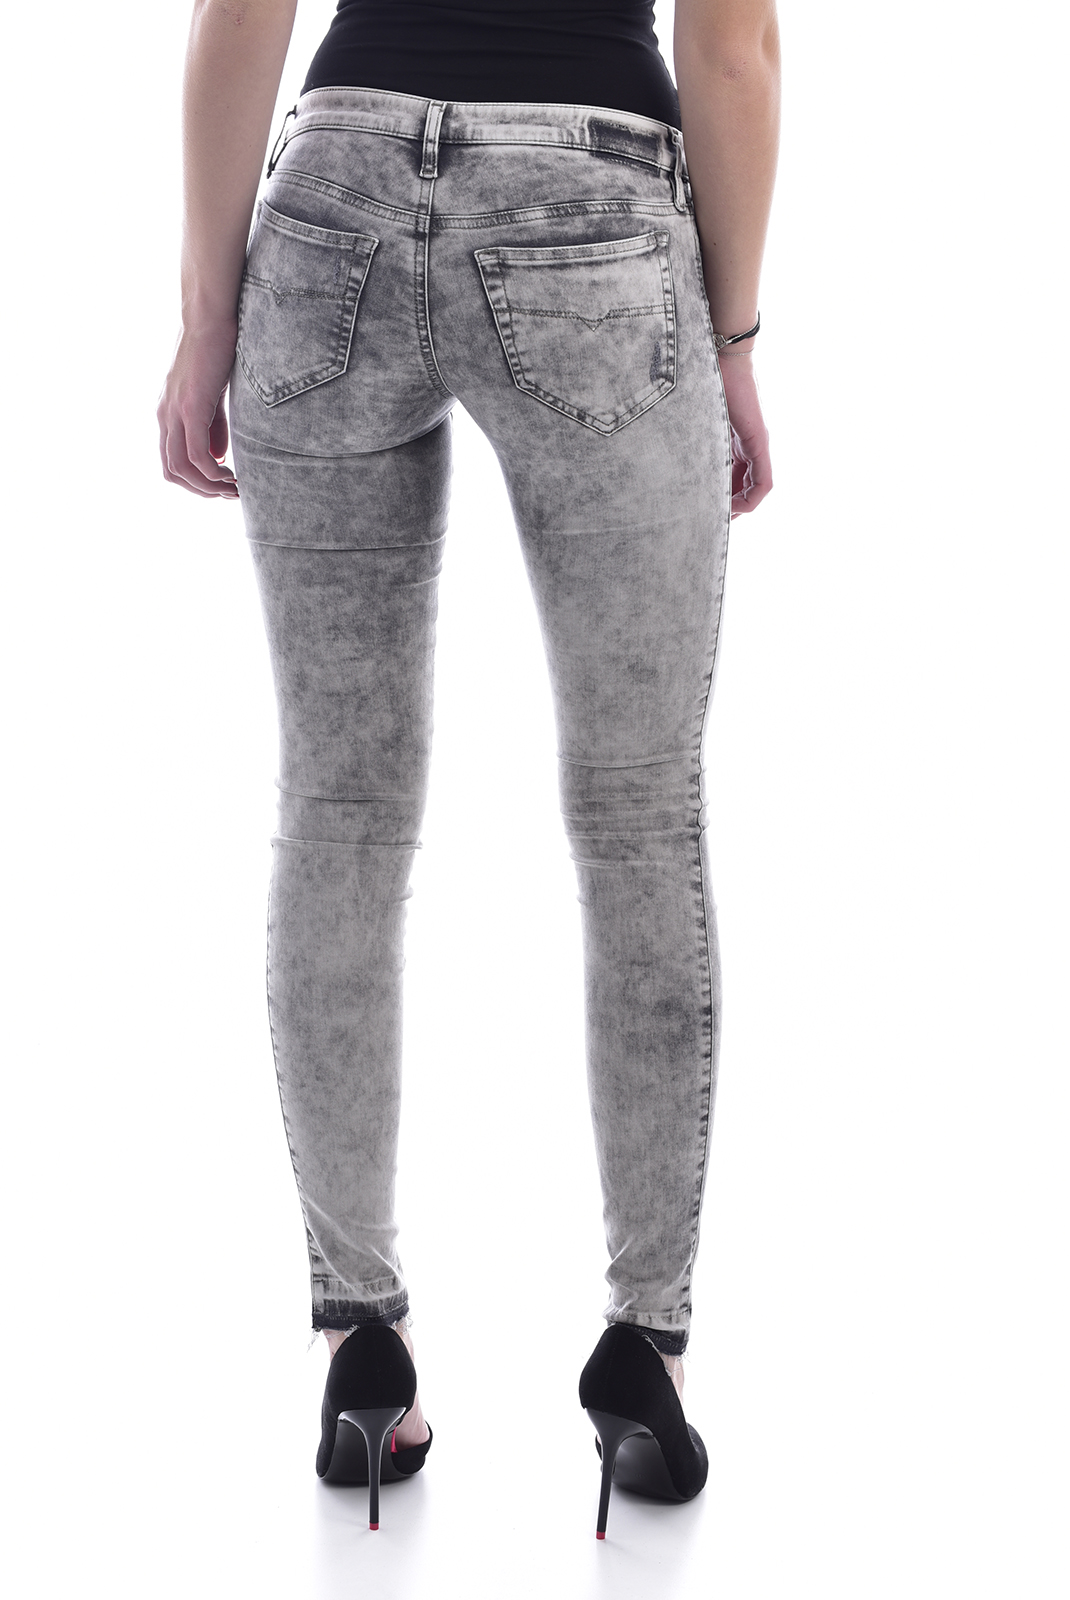 Diesel Jeans Gris Skinny Taille Basse Skinzee-low-c 0679s Effet Neige